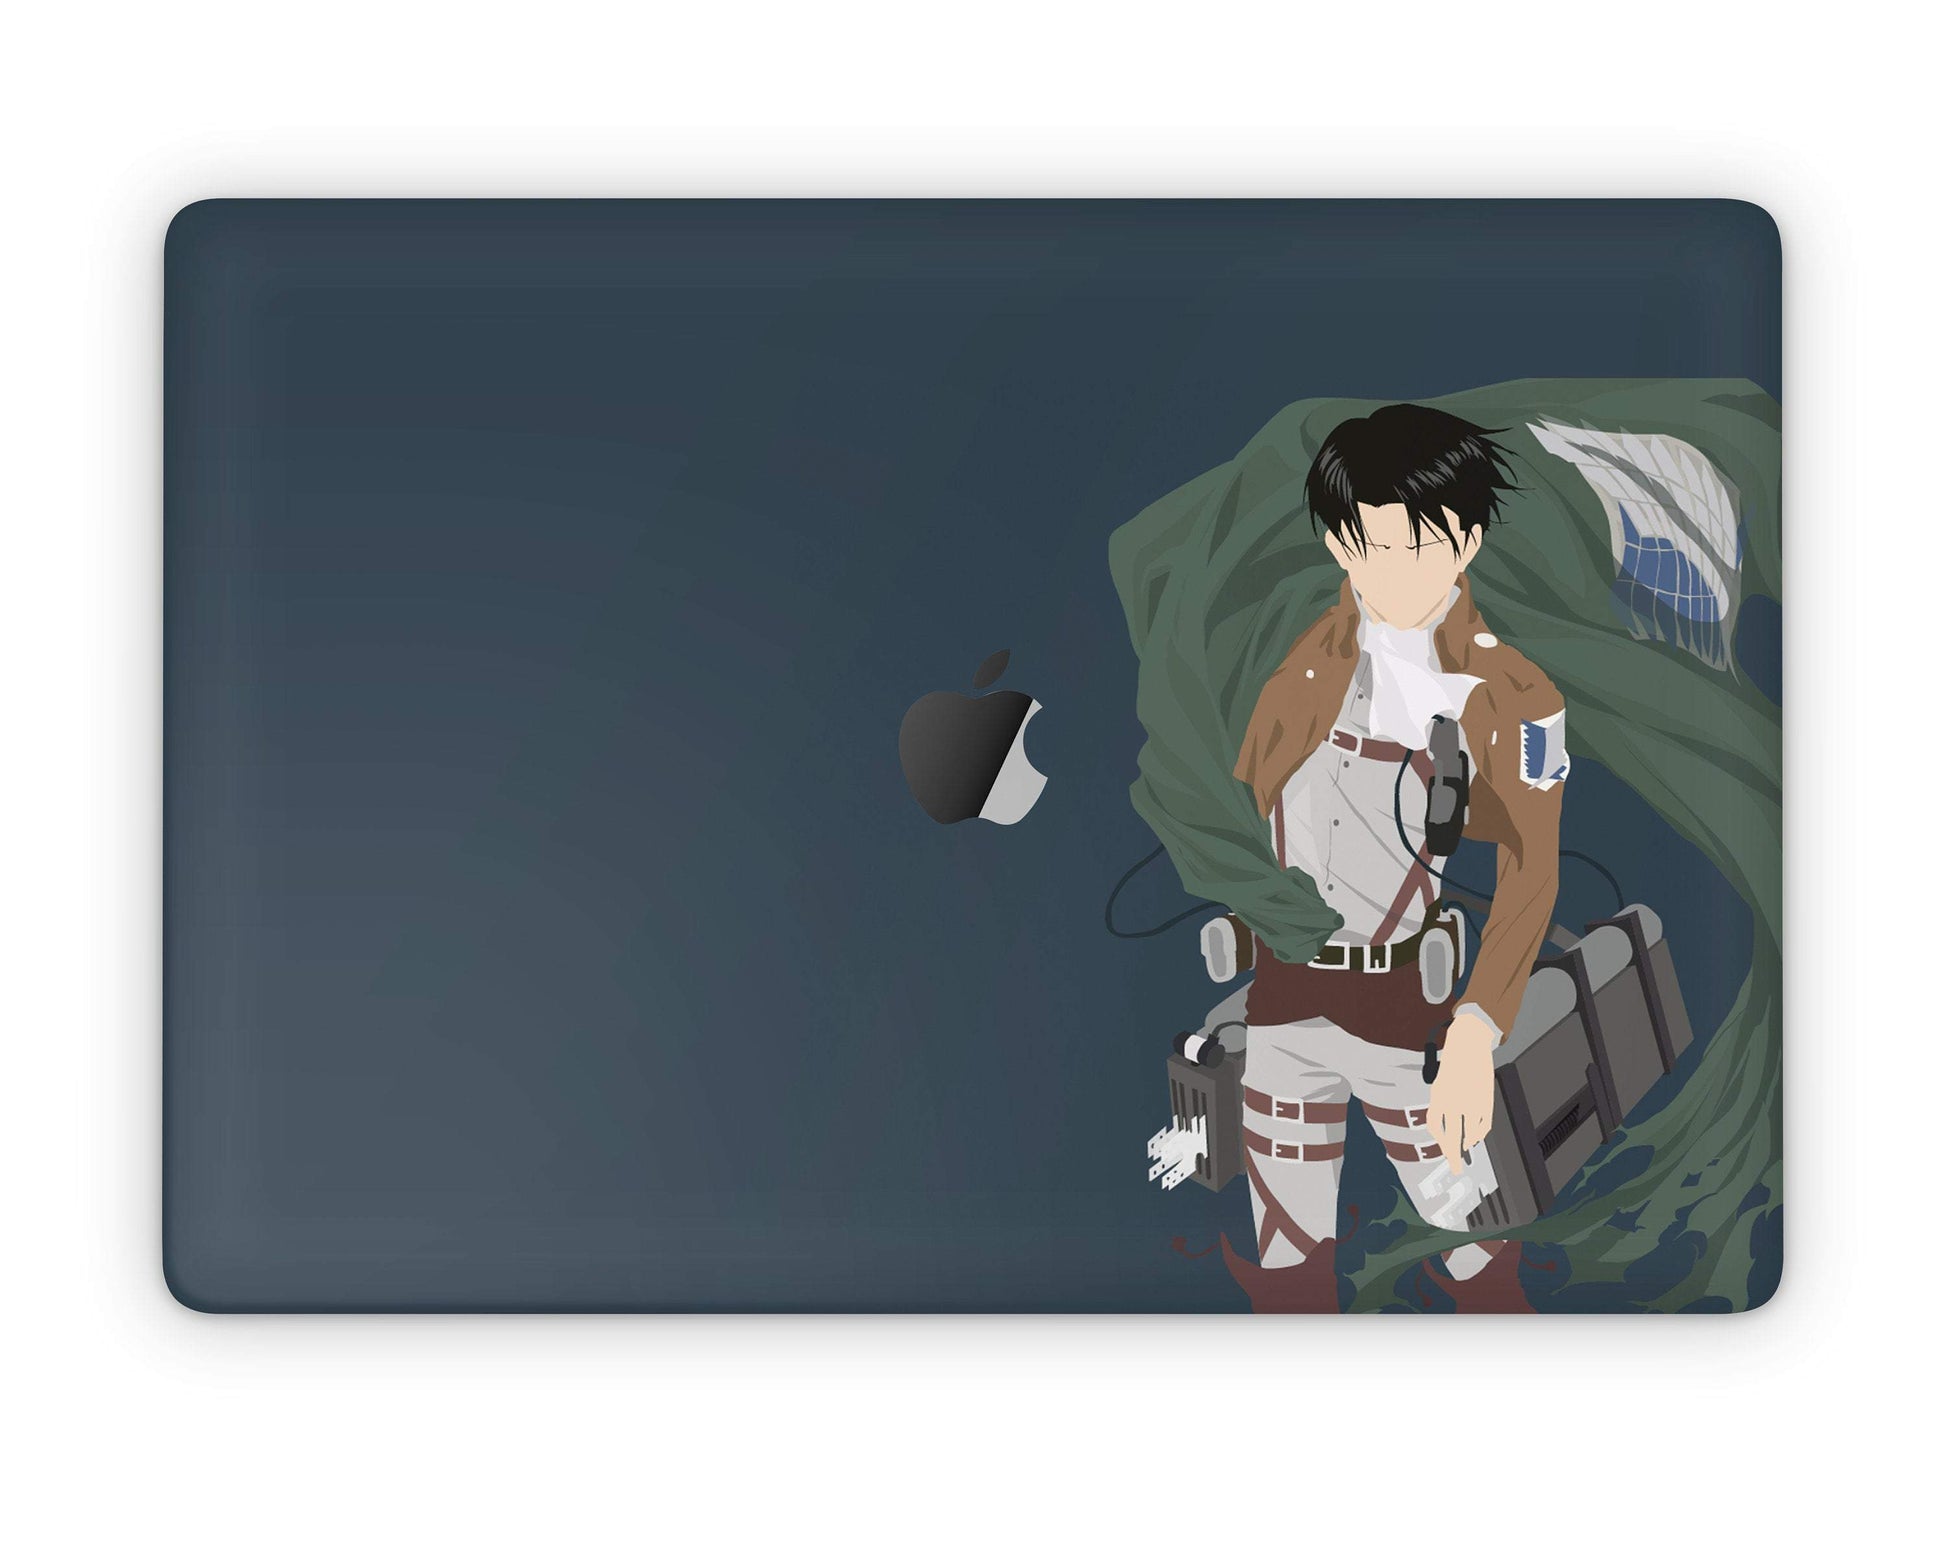 Apple MacBook Minimalistic Attack on Titan Levi Pro 16" (A2141) Skins - Anime Attack on Titan Skin